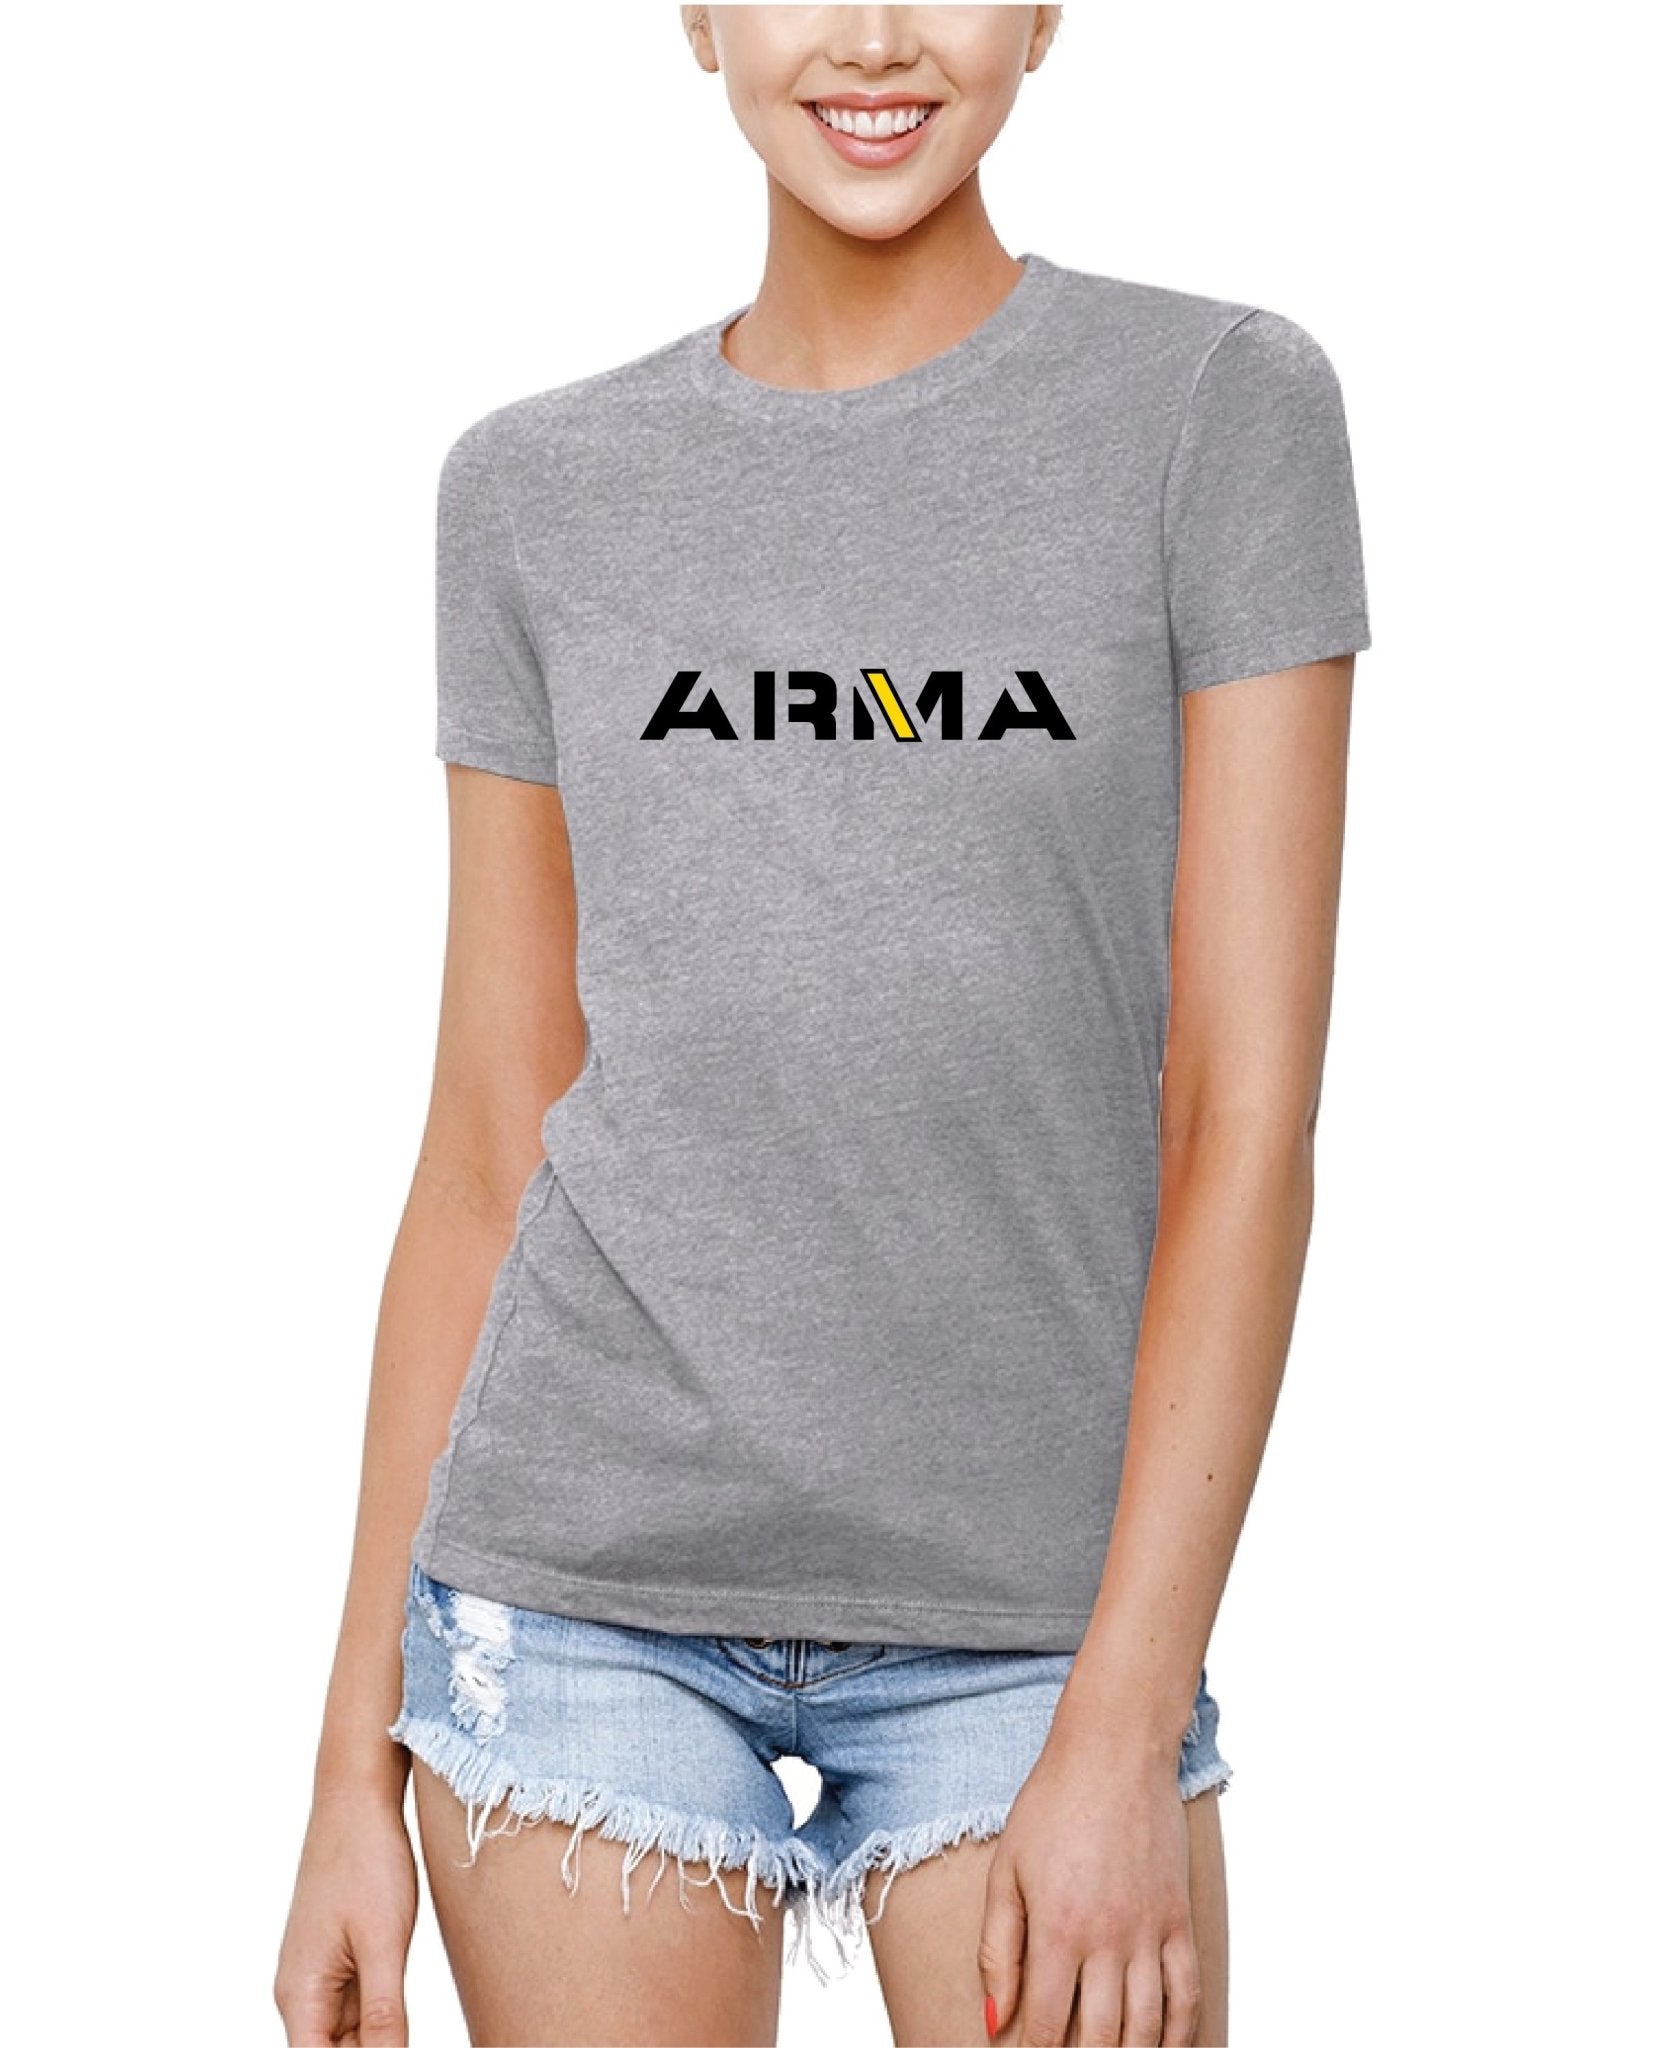 ARMA Wordmark Tee (Womens) - Arma Sport